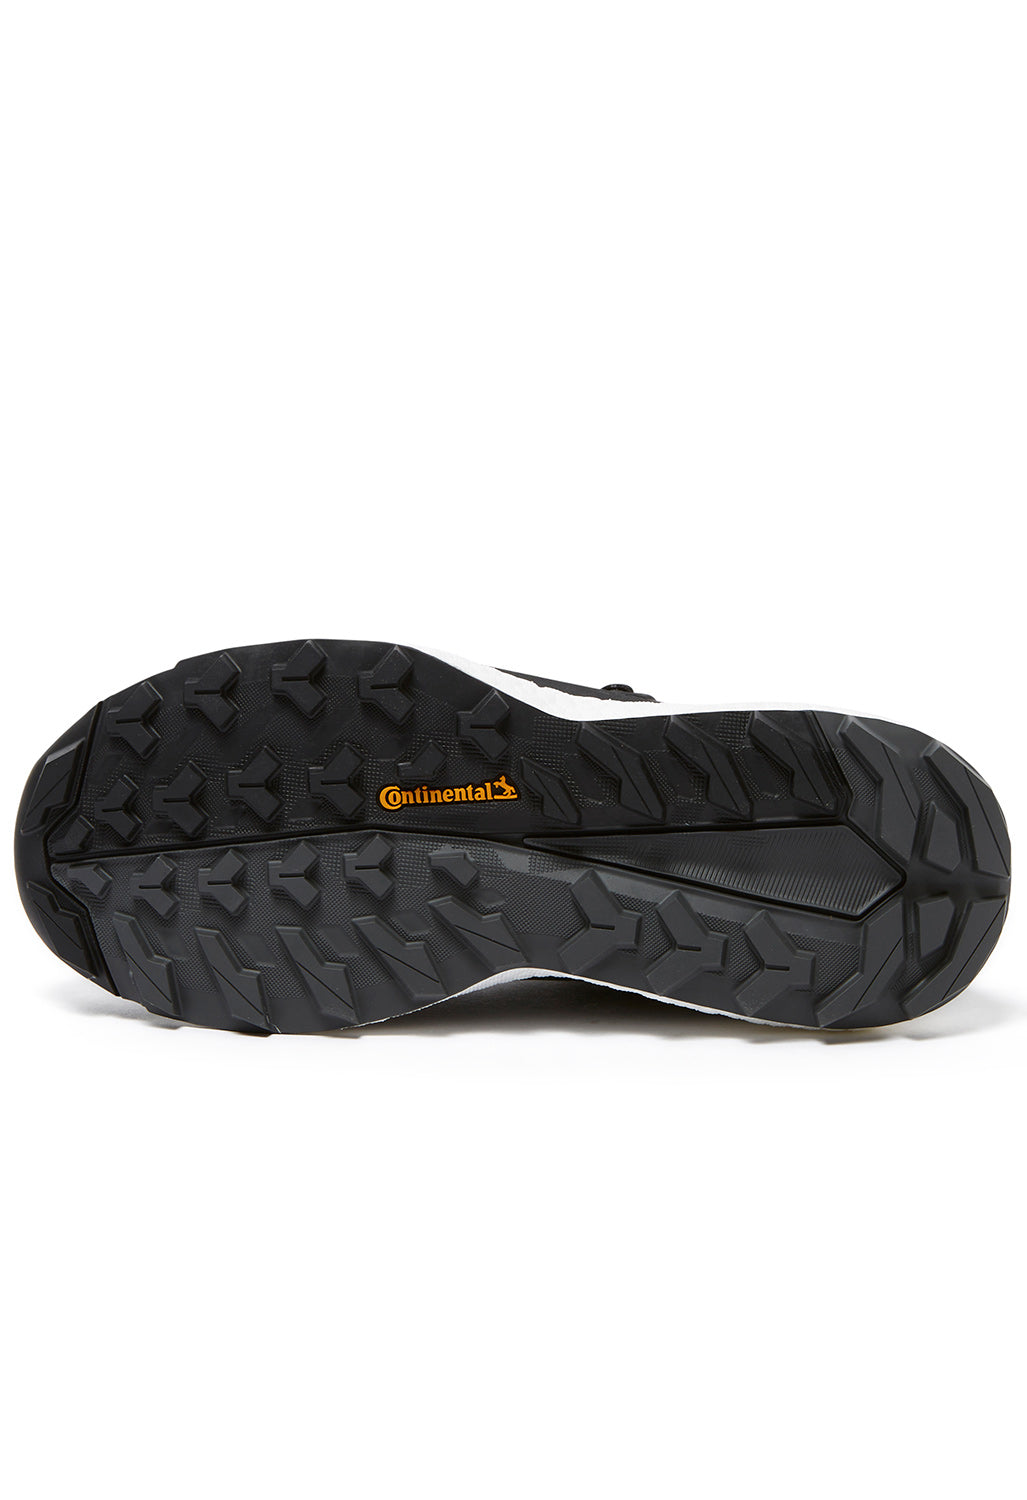 adidas TERREX Free Hiker 2 GORE-TEX Women's Boots - Core Black/Grey Six/Grey Three